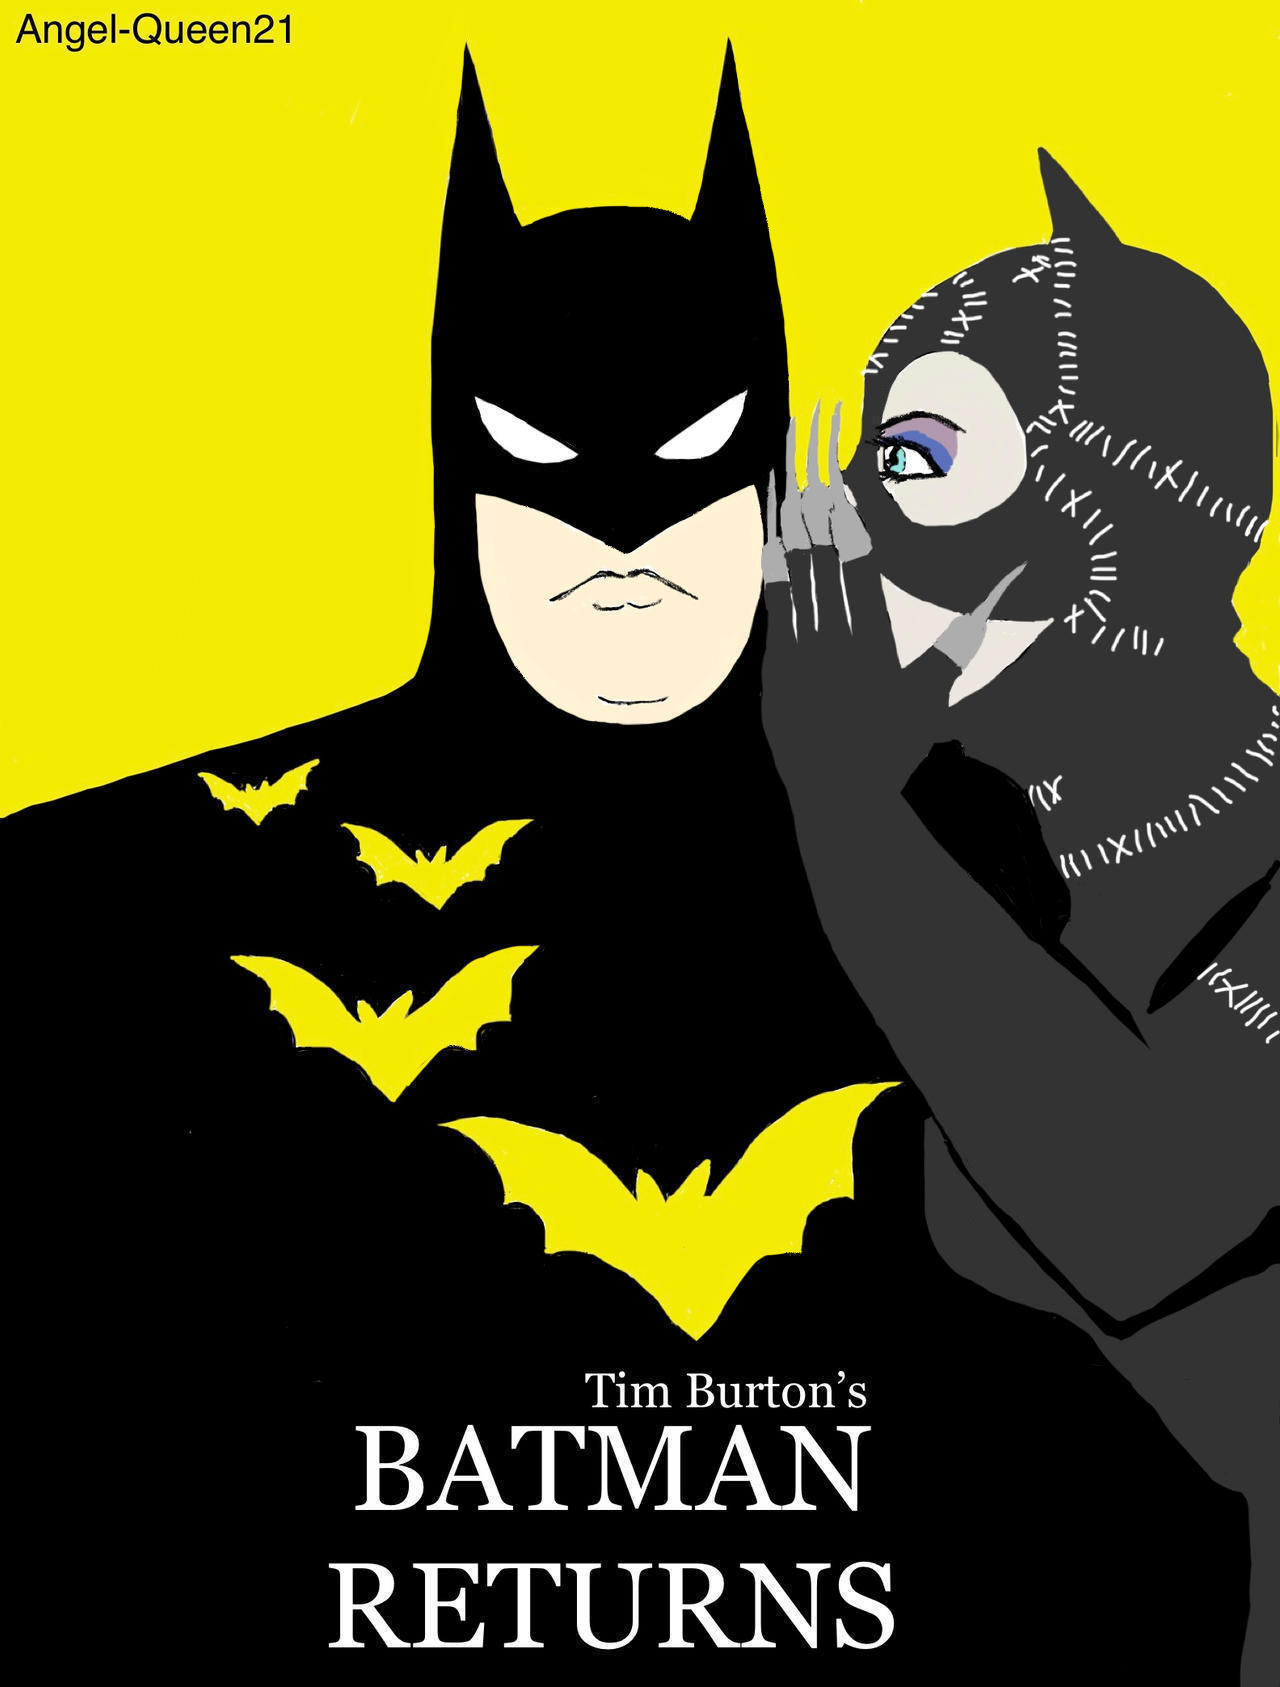 Batman Returns Poster by Angel-Queen21 on DeviantArt